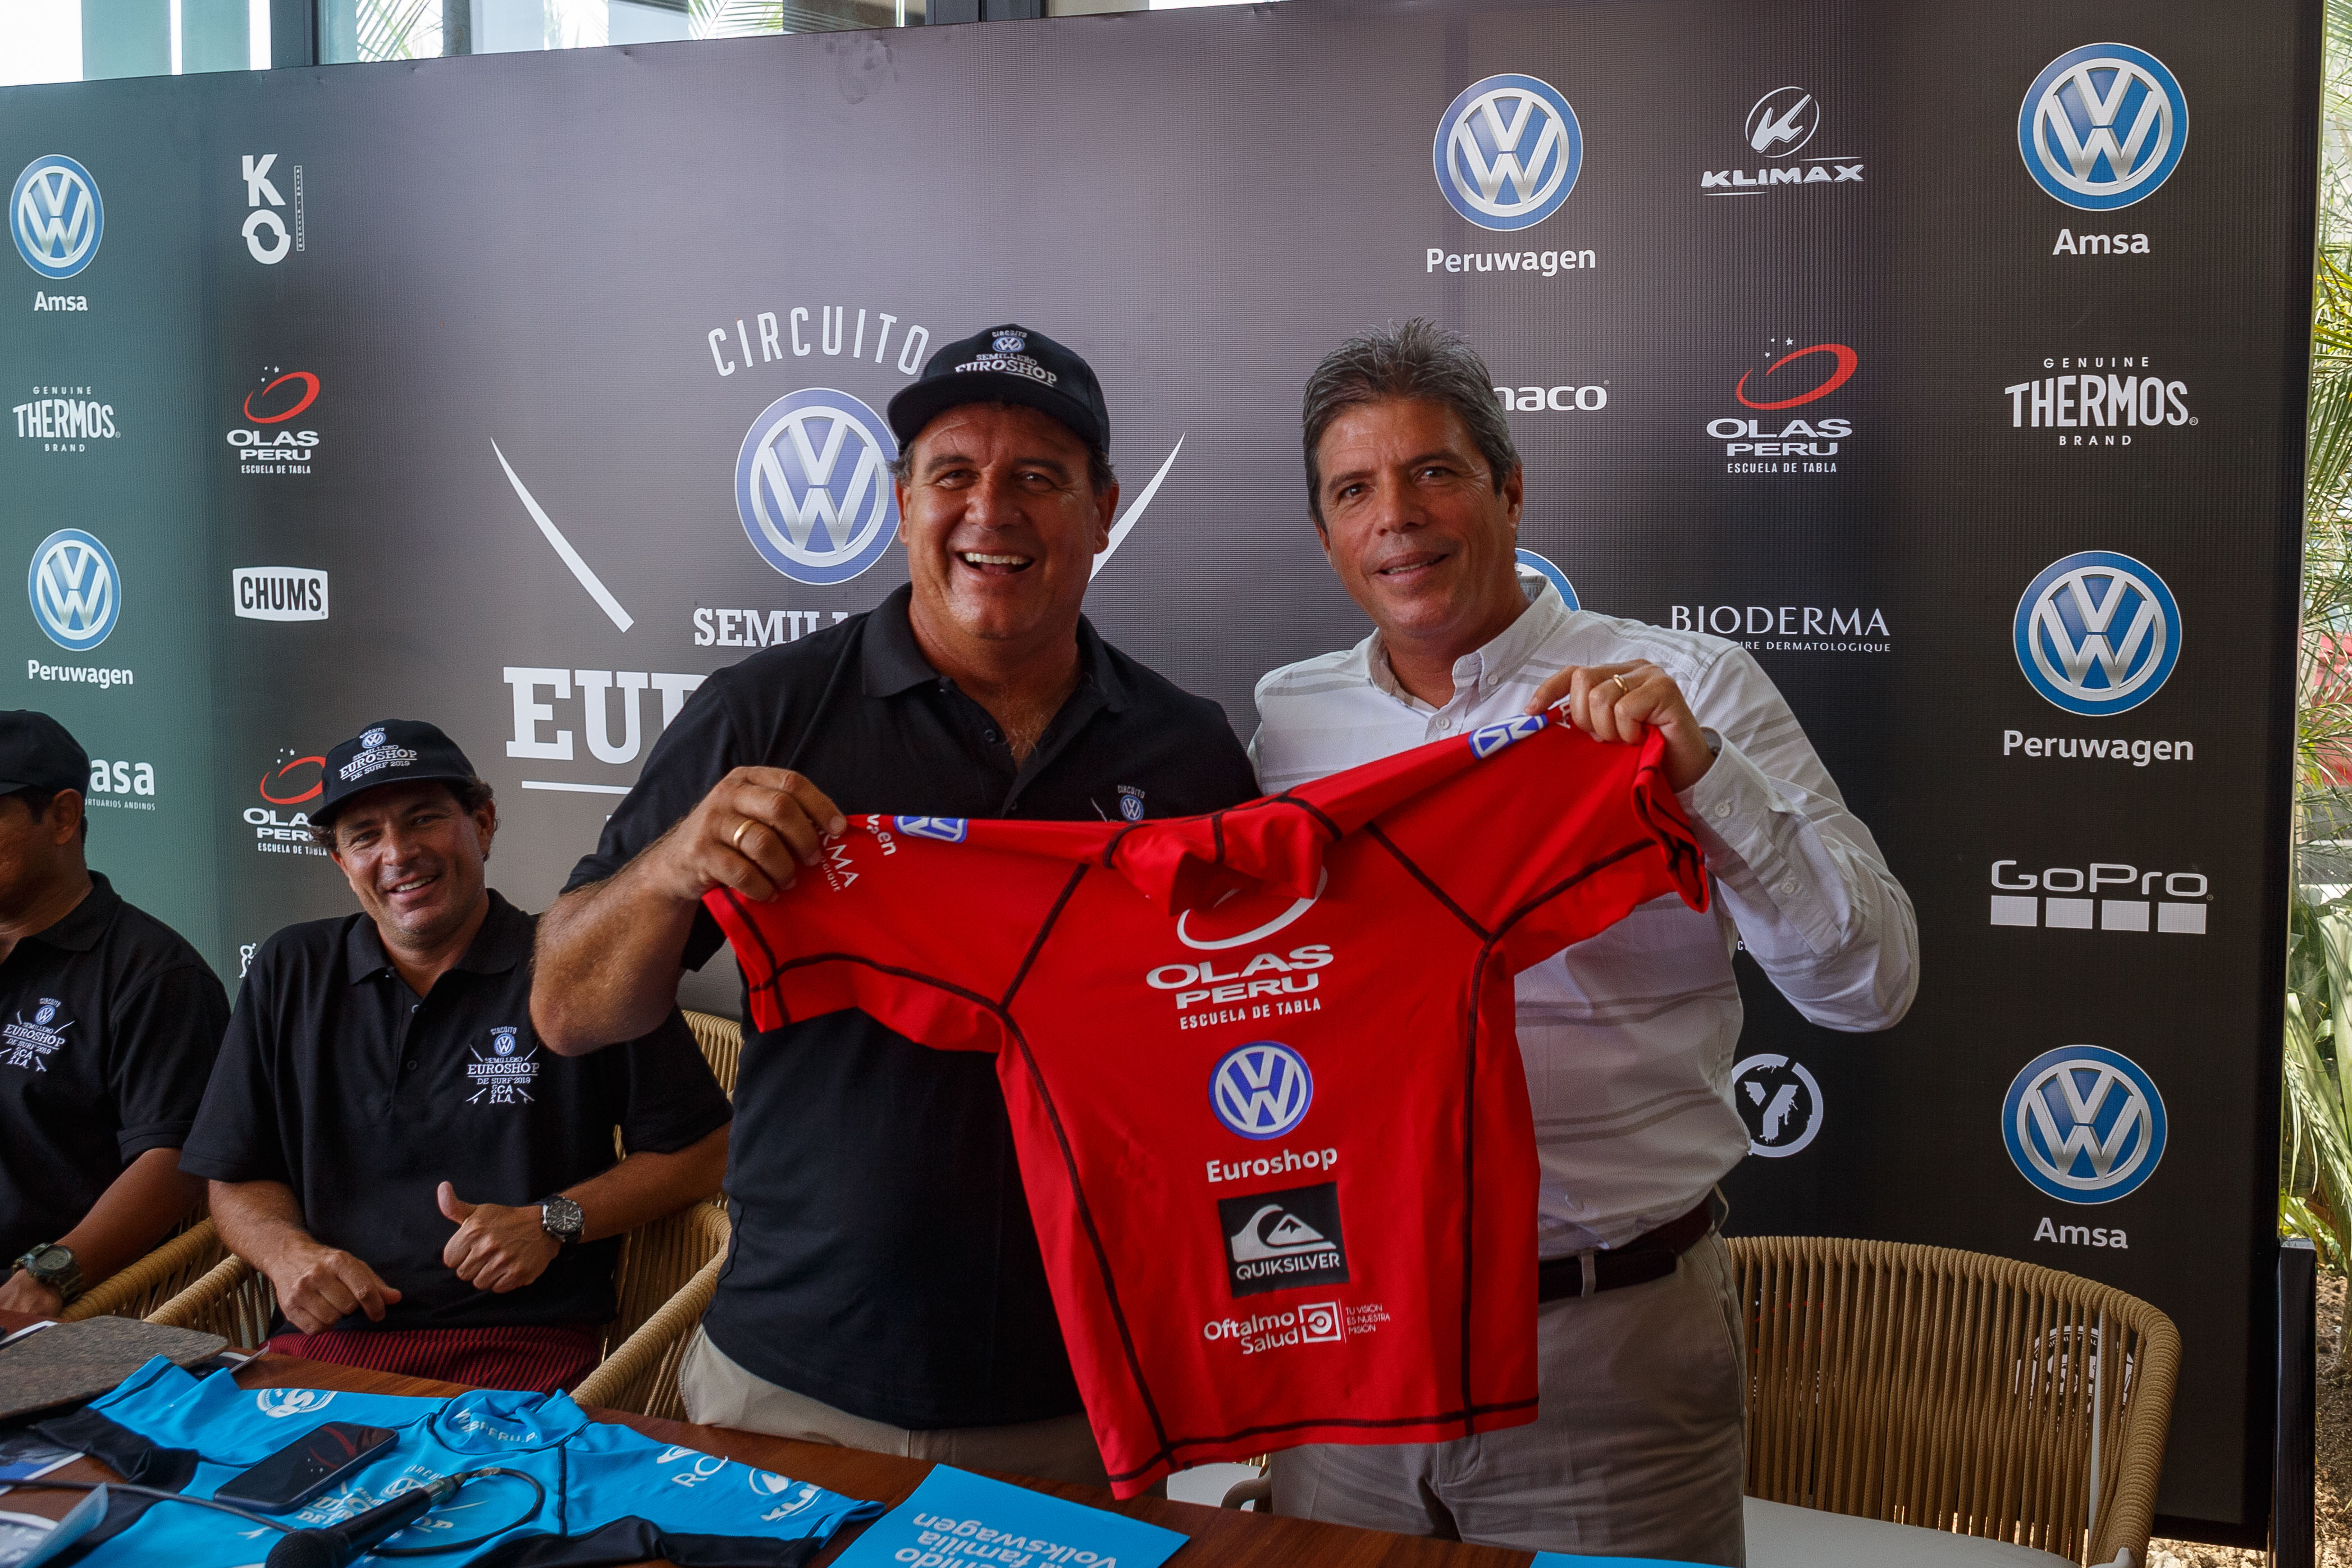 Conferencia de prensa: Circuito Semillero VW Euroshop de Surf 2019